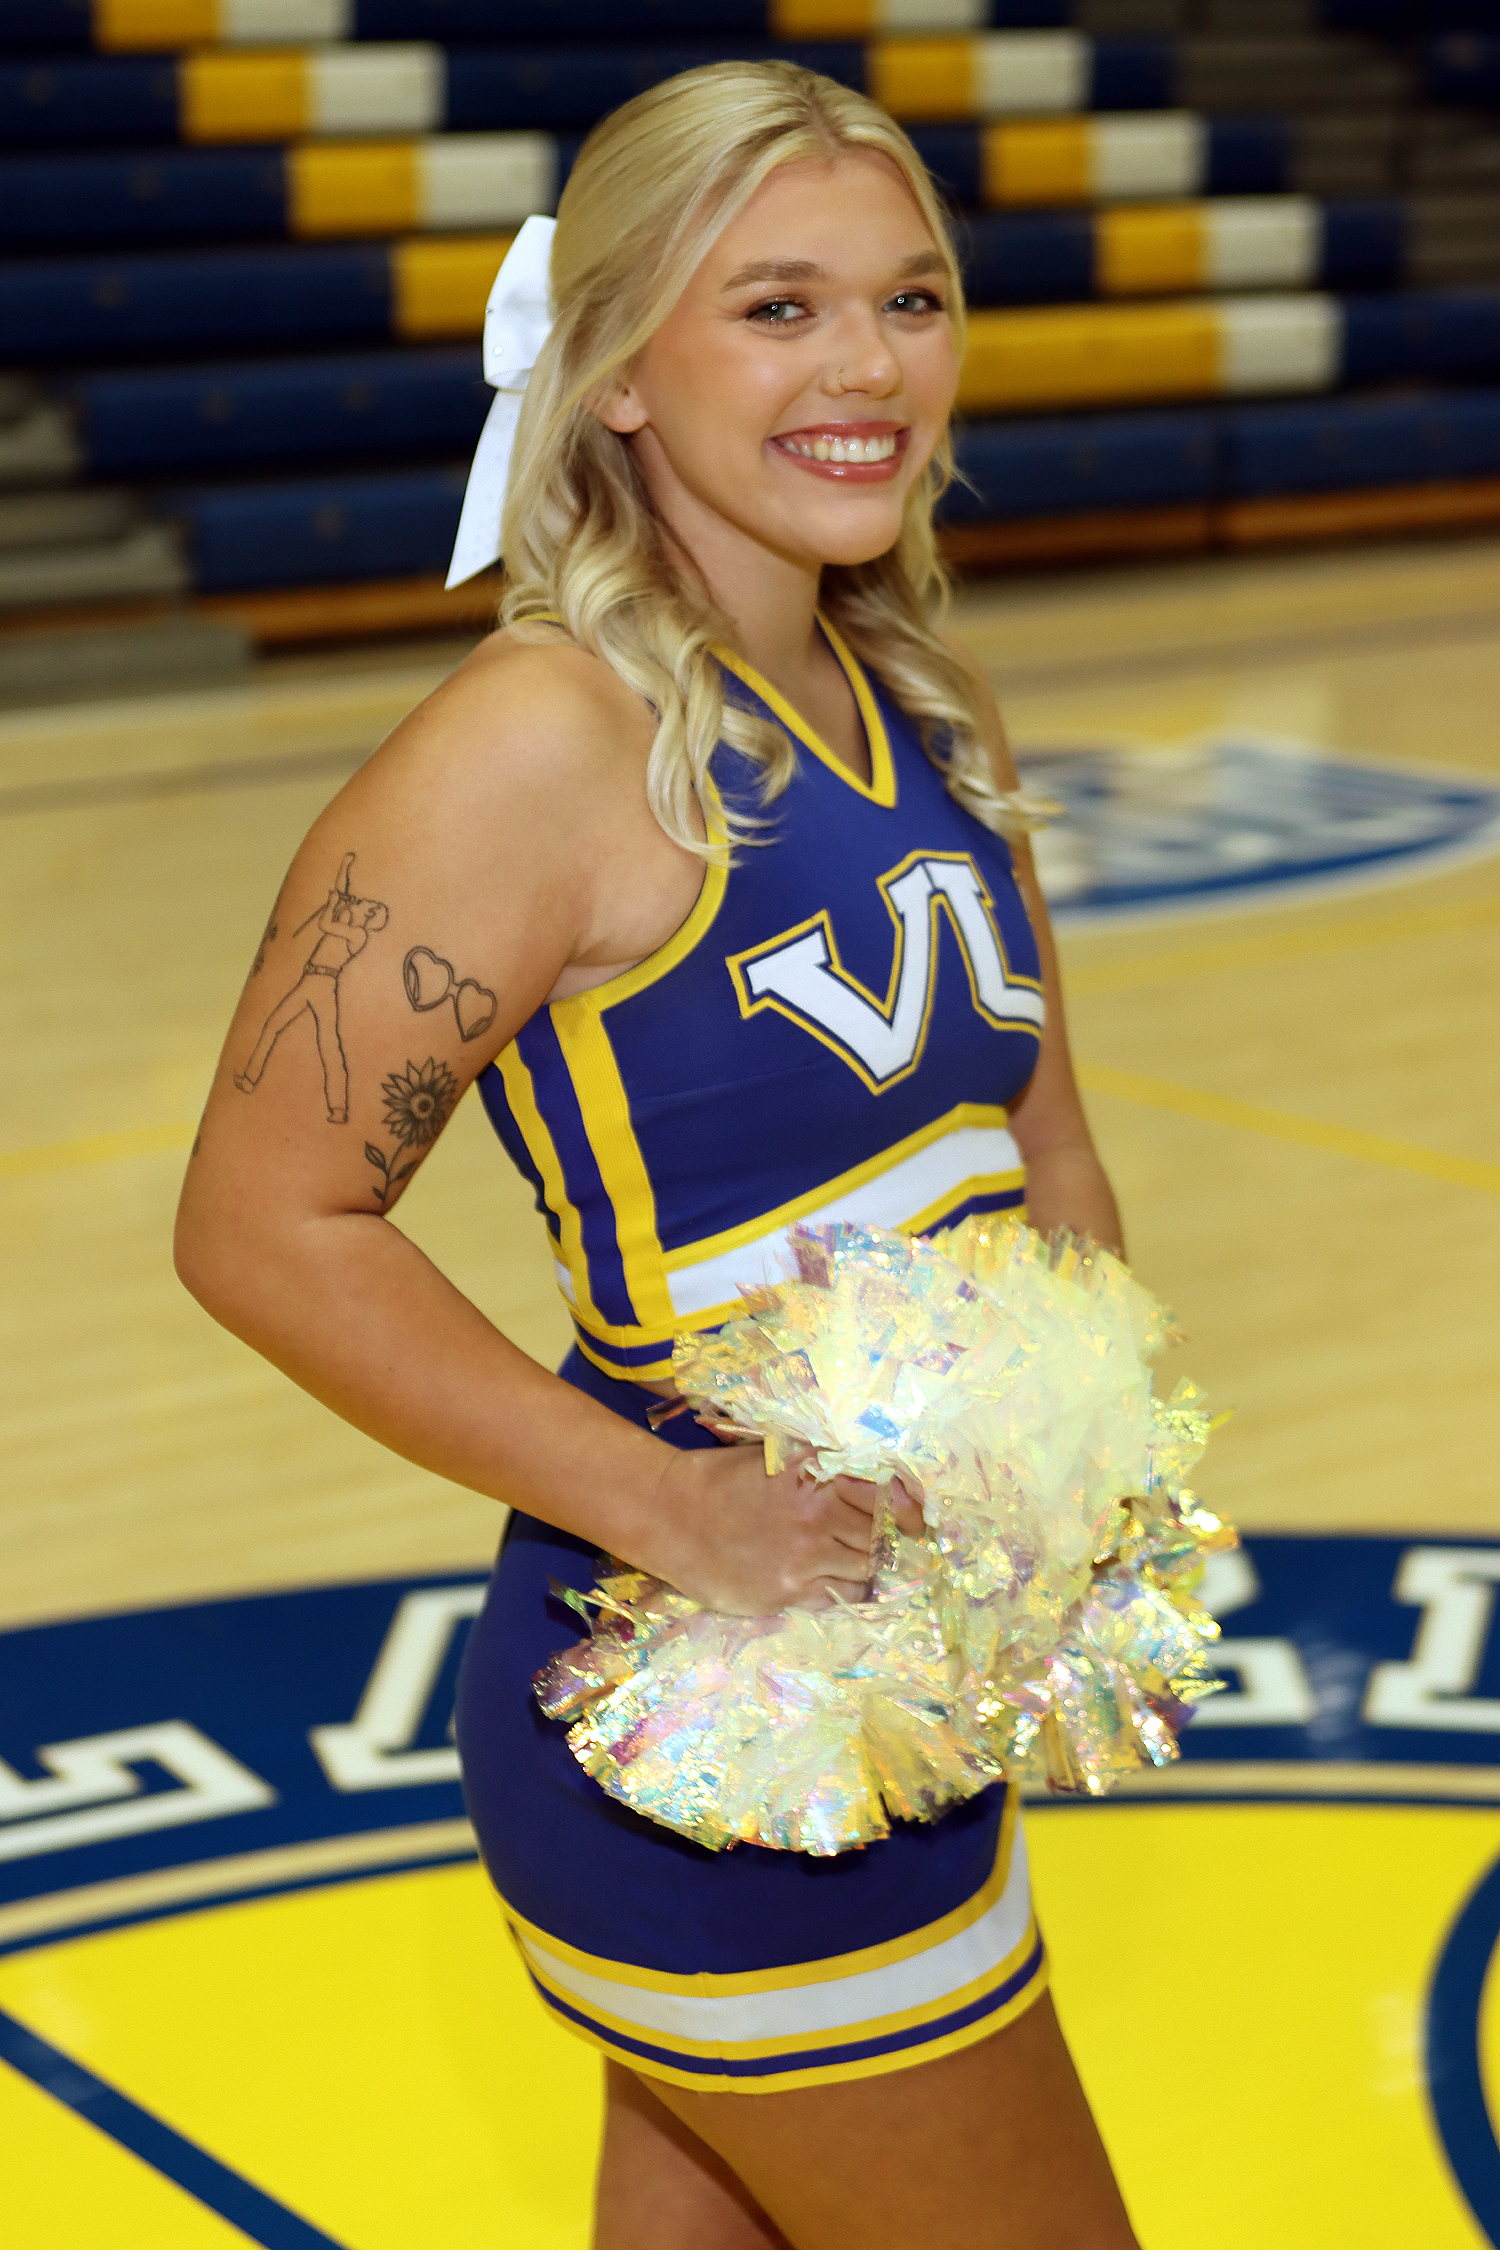 VU cheerleader Amelia Huffman wearing her cheer uniform and holding pom poms.